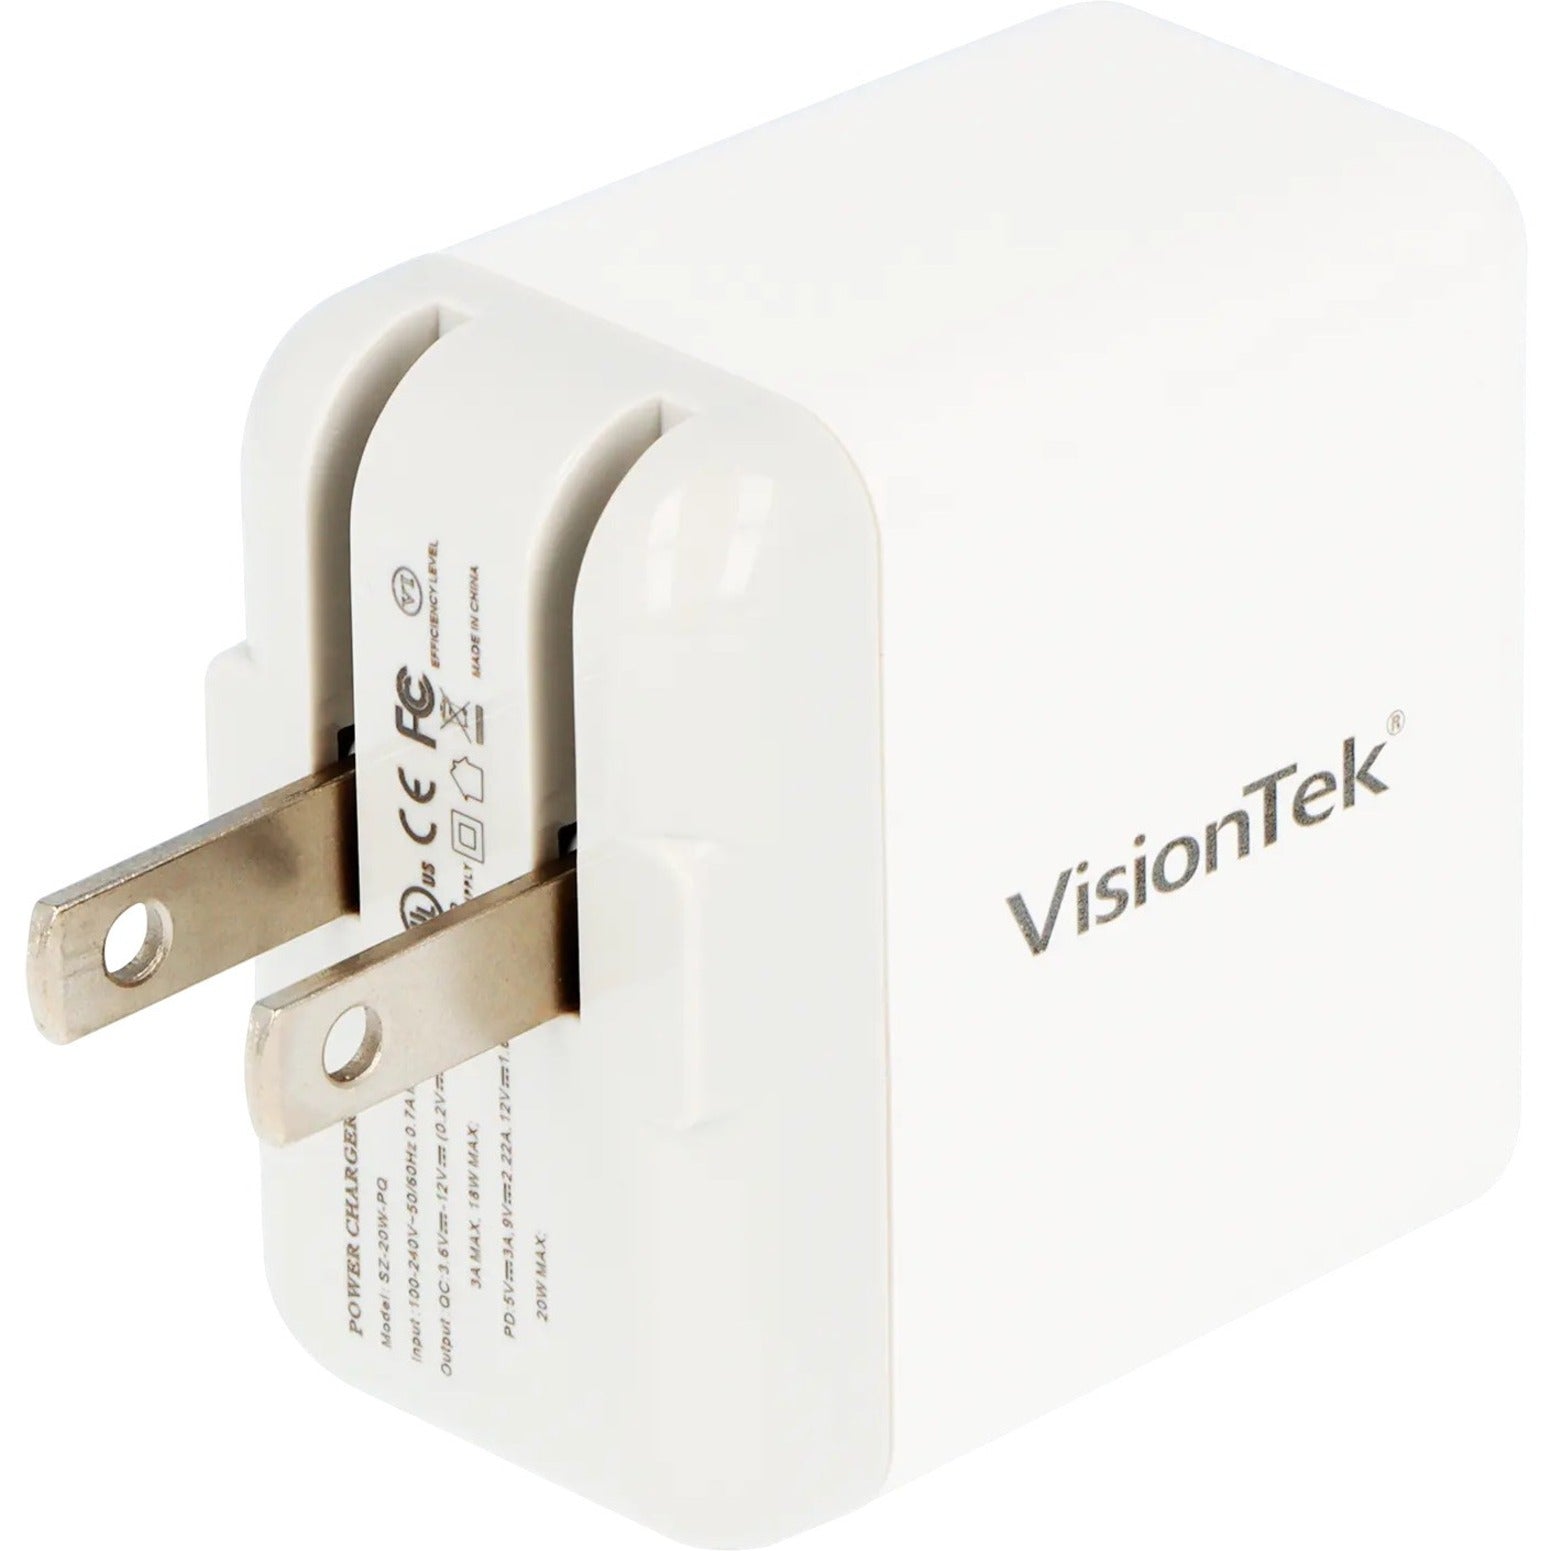 VisionTek 901553 AC Adapter, 20W USB-C Power Supply for Samsung Galaxy, Google Pixel, Apple iPad